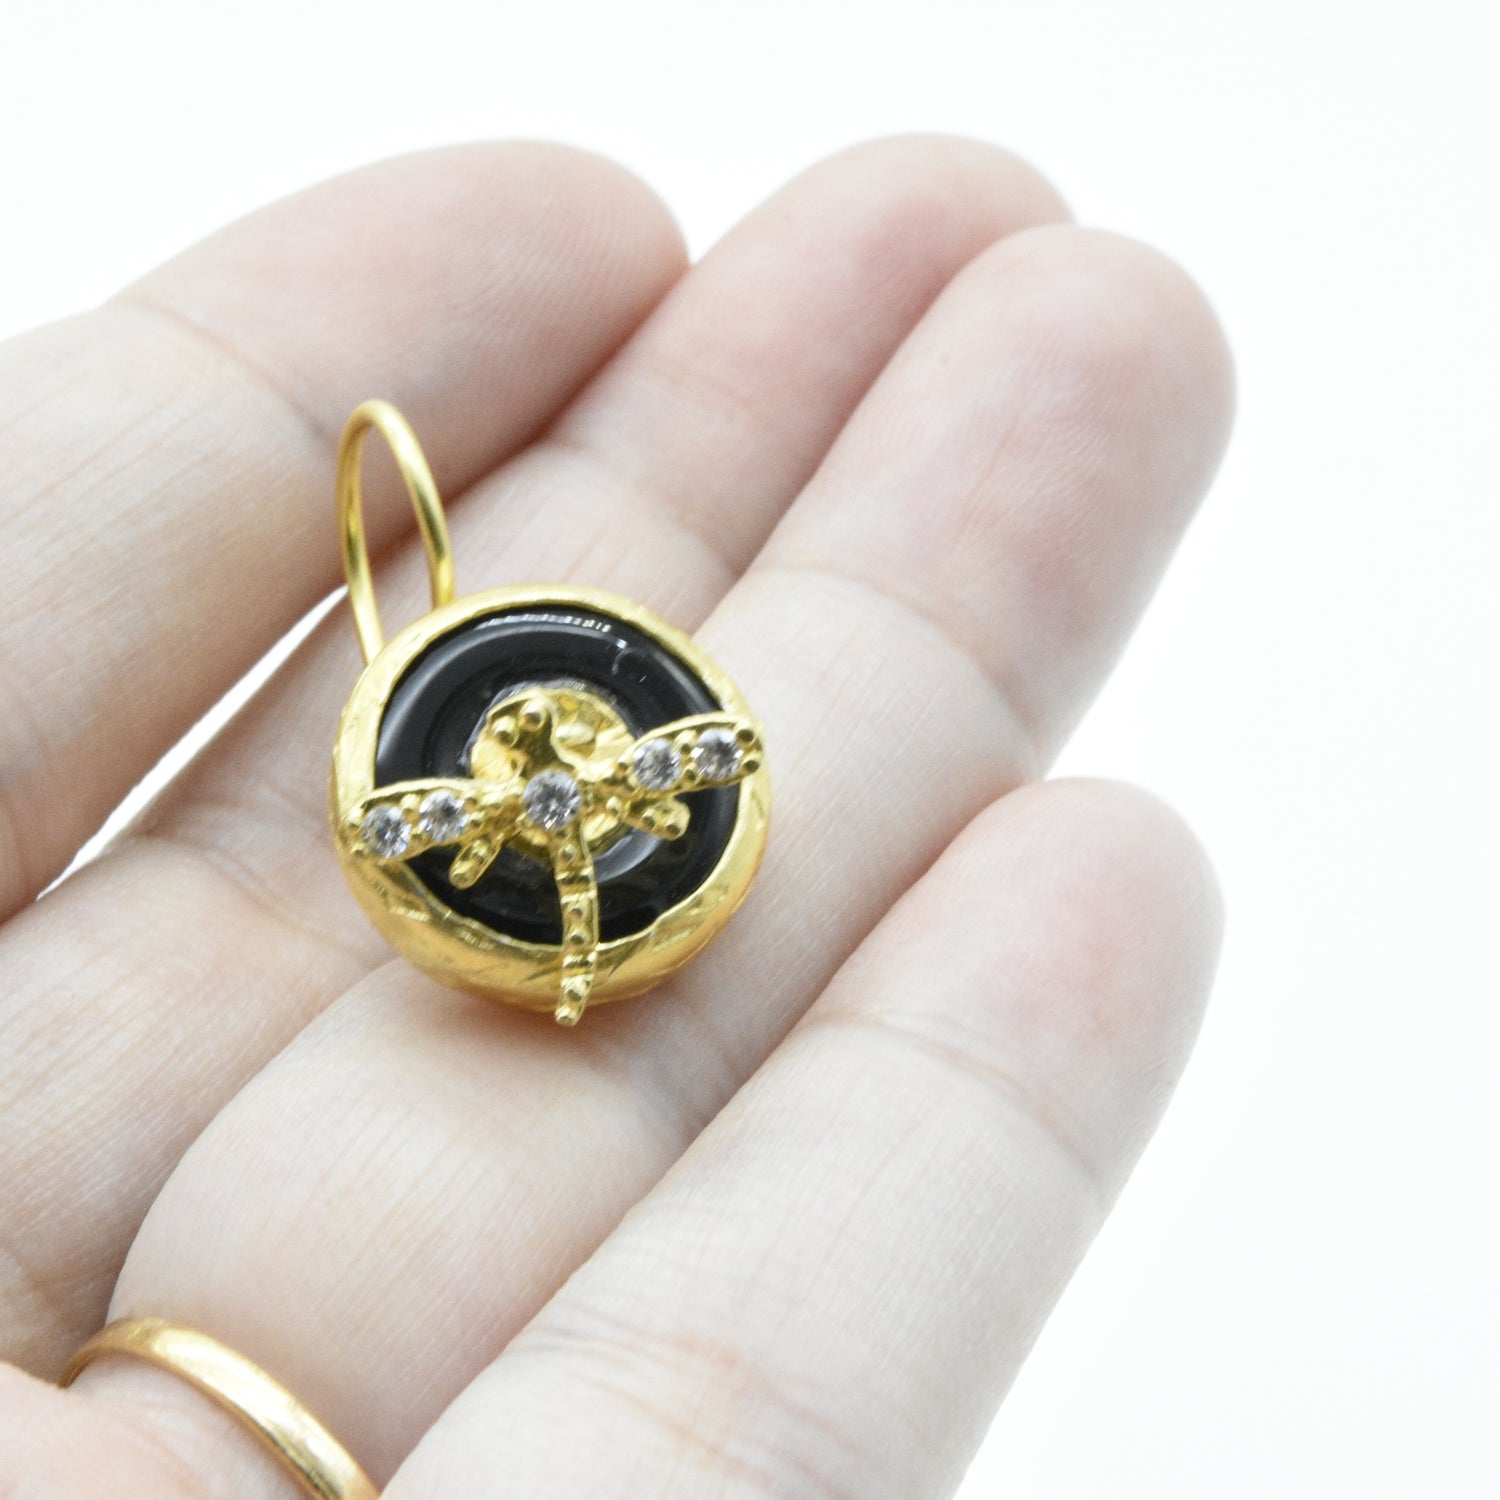 Aylas Onyx earrings - 21ct Gold plated semi precious gemstone - Handmade in Ottoman Style by Artisan